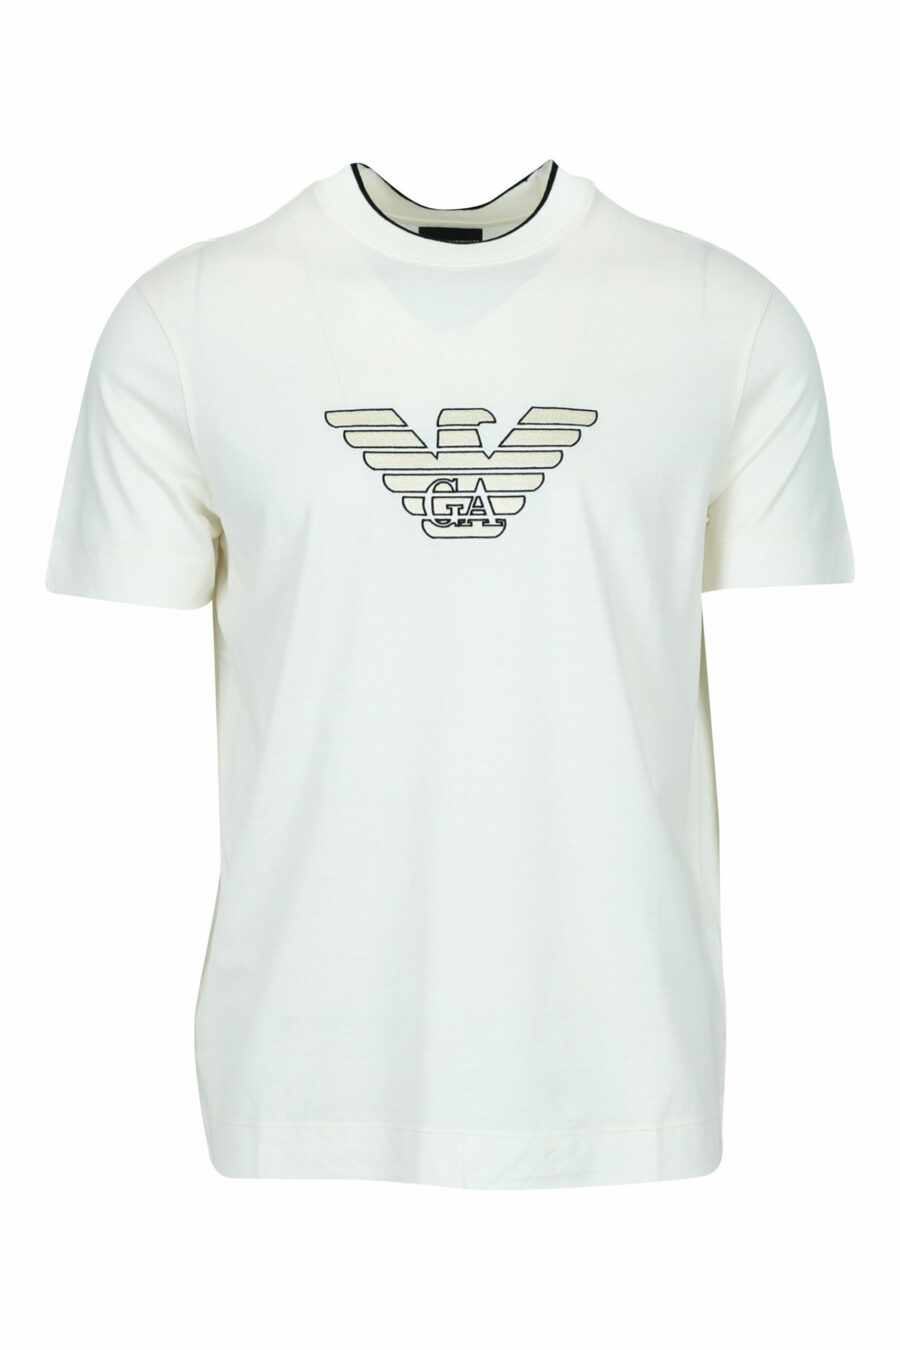 Cream-coloured T-shirt with centred eagle maxilogo - 8058947986996 scaled